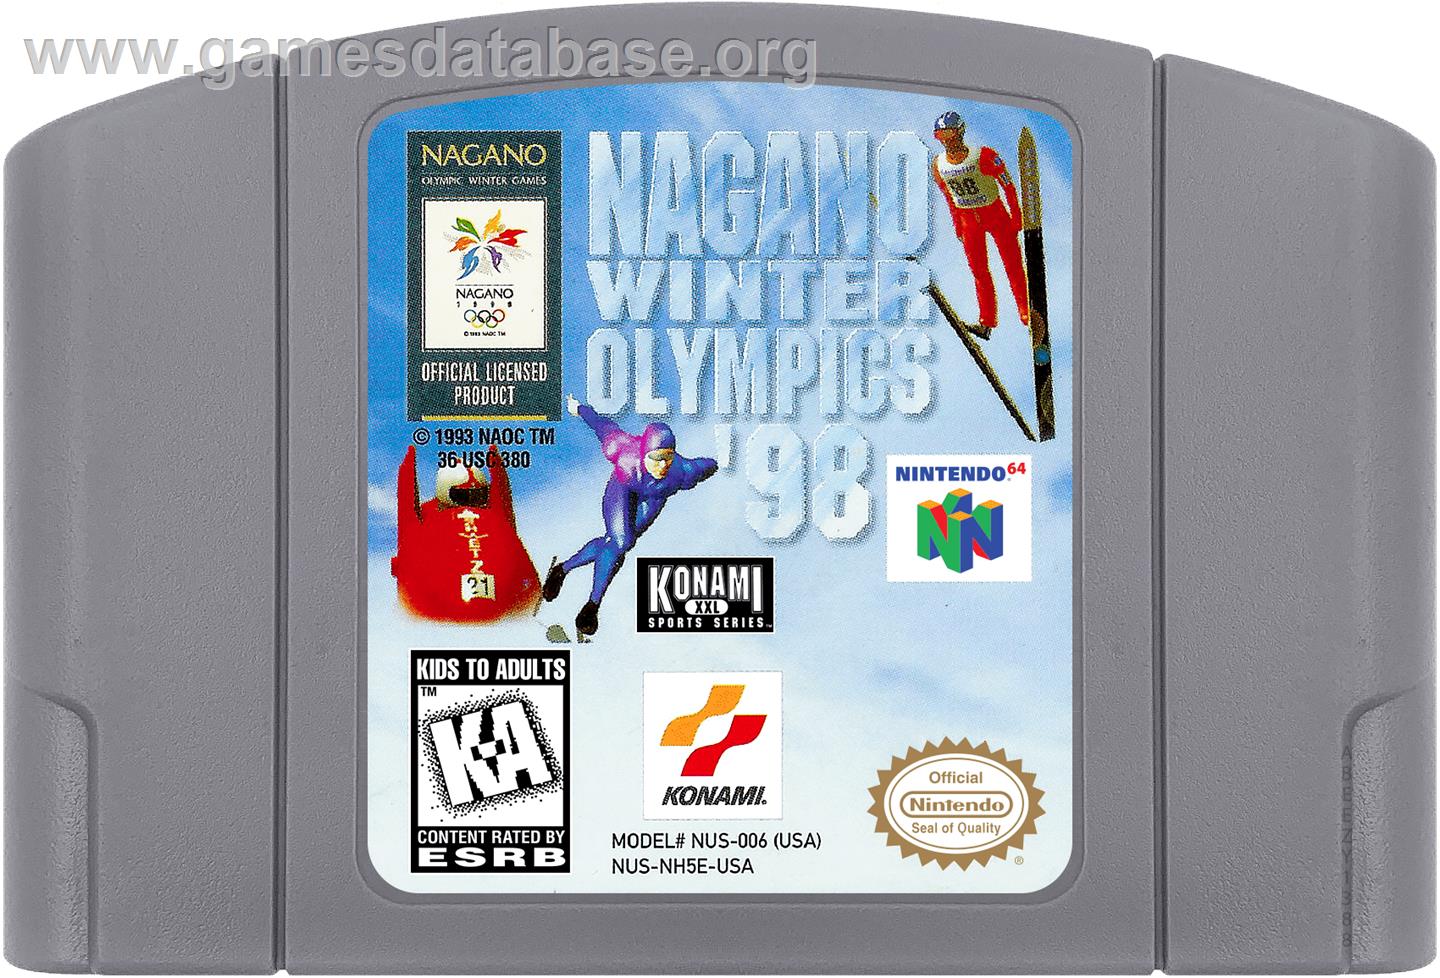 Nagano Winter Olympics '98 - Nintendo N64 - Artwork - Cartridge